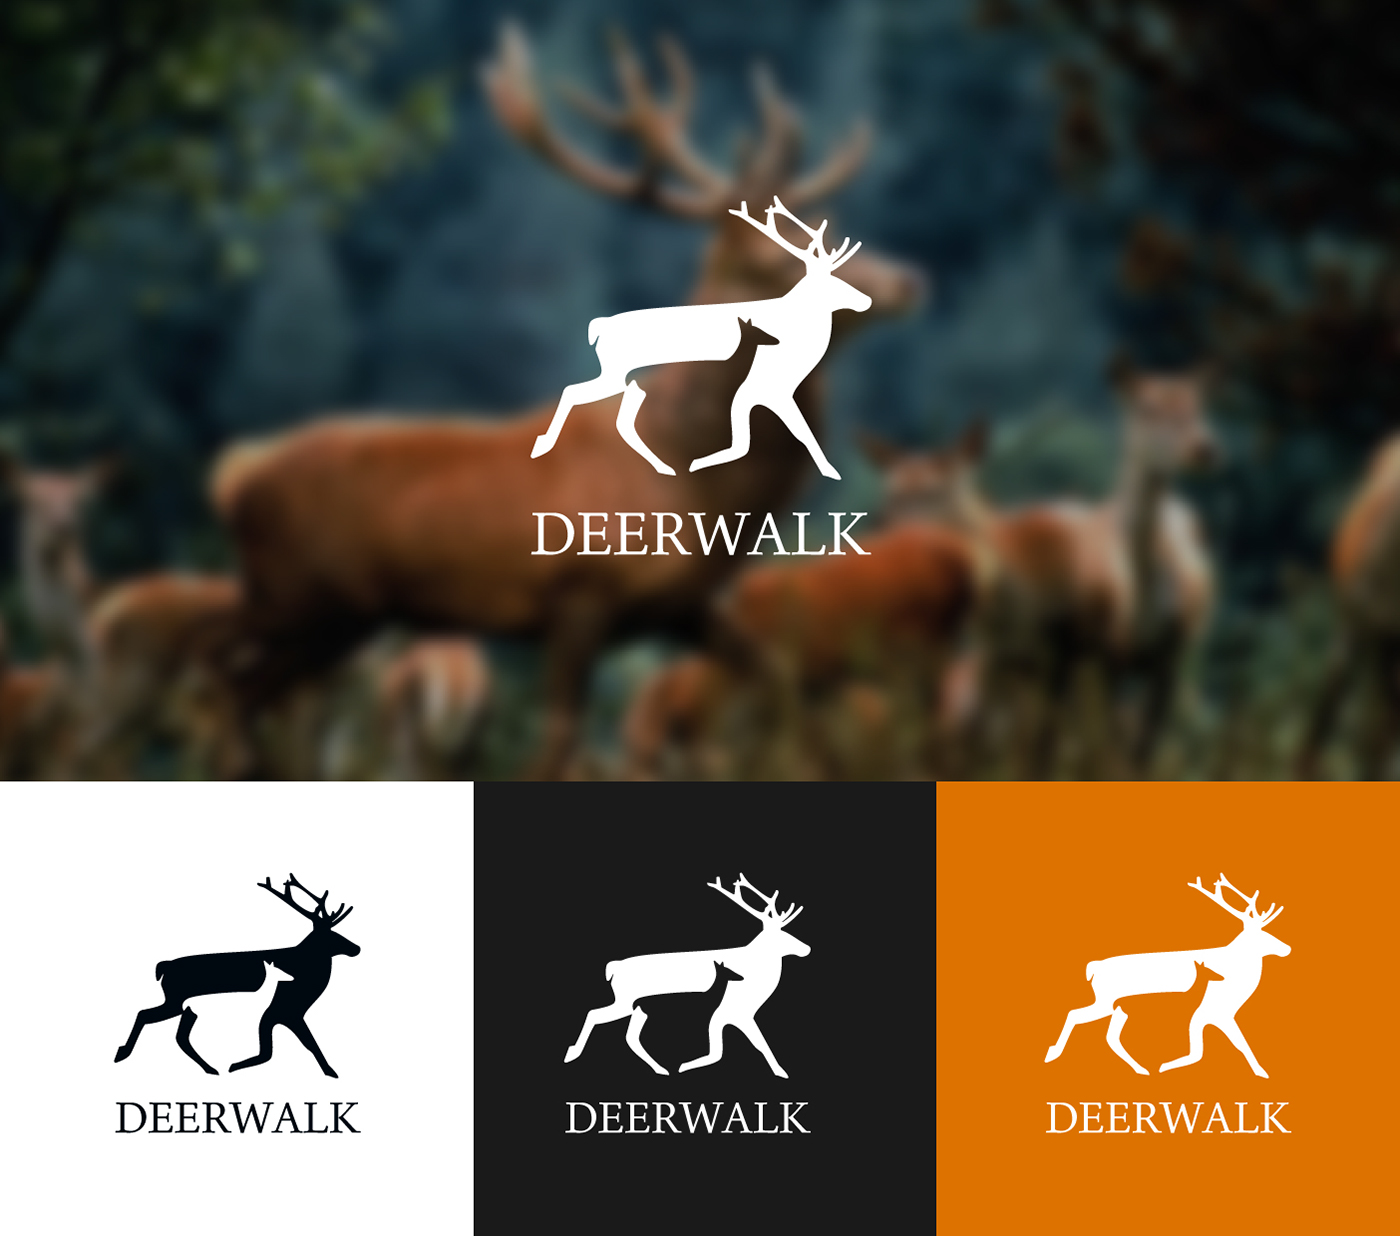 deerwalk deer animal mark Corporate Identity brand identity logo design full bleed Creativity Identity Design Freelance atul pradhananga logo designer nepal trademark